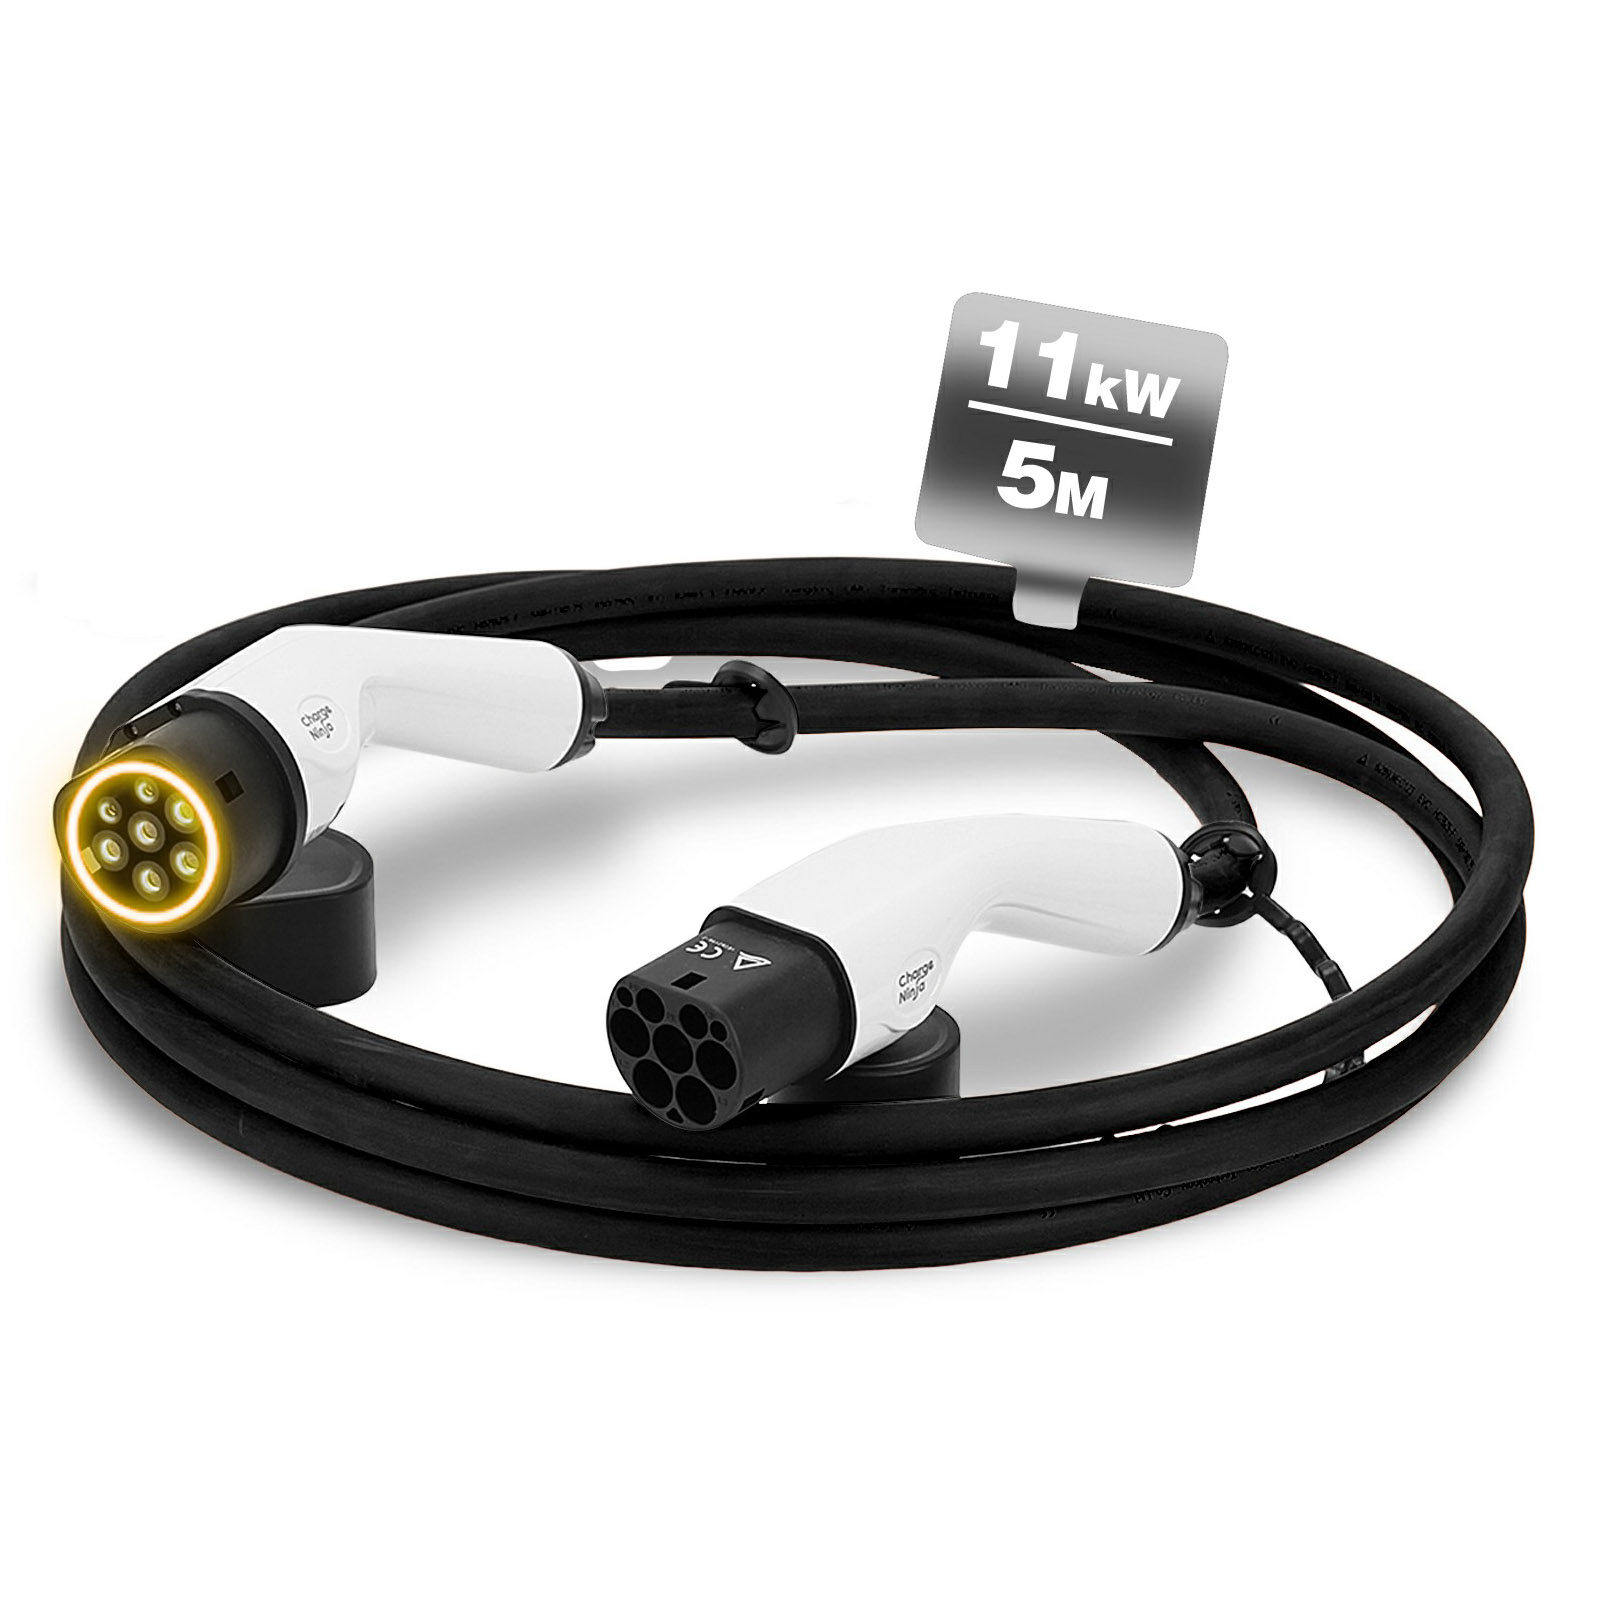 Charge Ninja EV Charging Cable 11kw 5m black colour